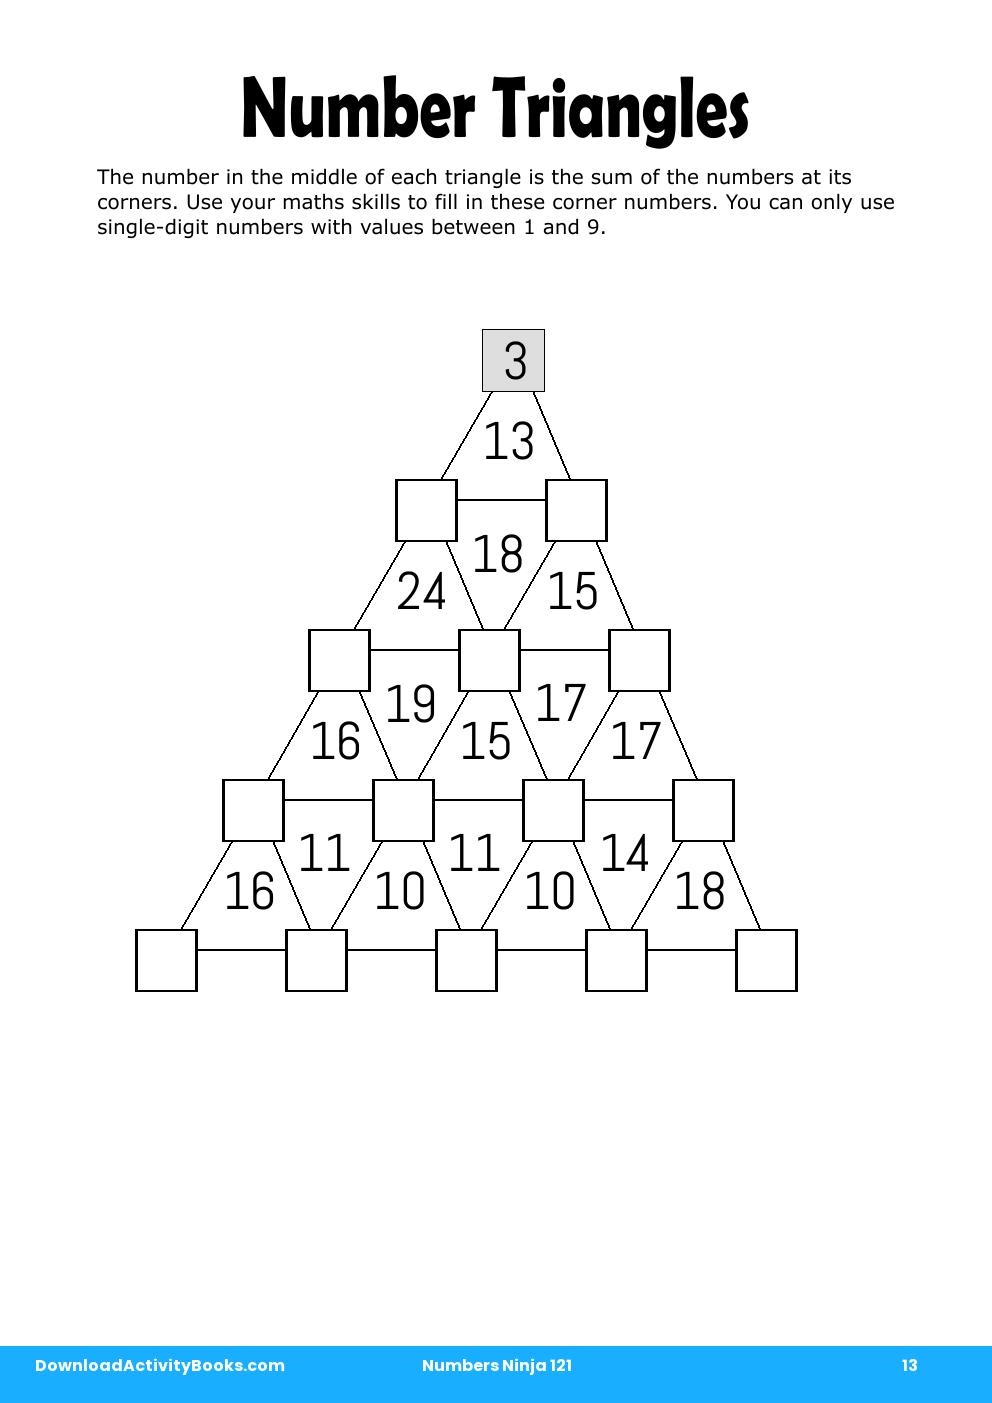 Number Triangles in Numbers Ninja 121